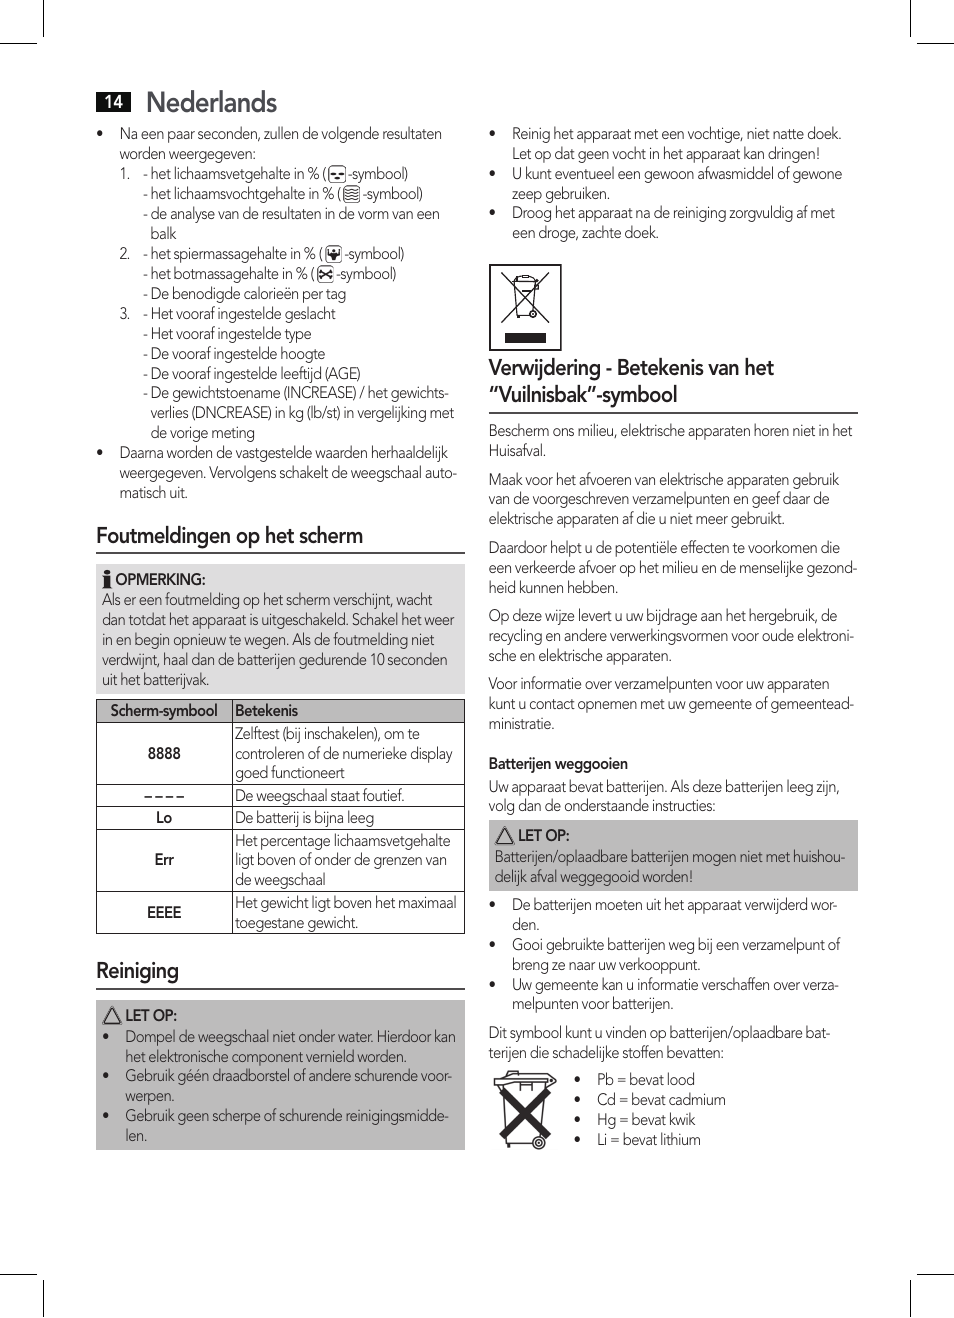 Nederlands, Foutmeldingen op het scherm, Reiniging | AEG PW 5571 FA User  Manual | Page 14 / 62 | Original mode